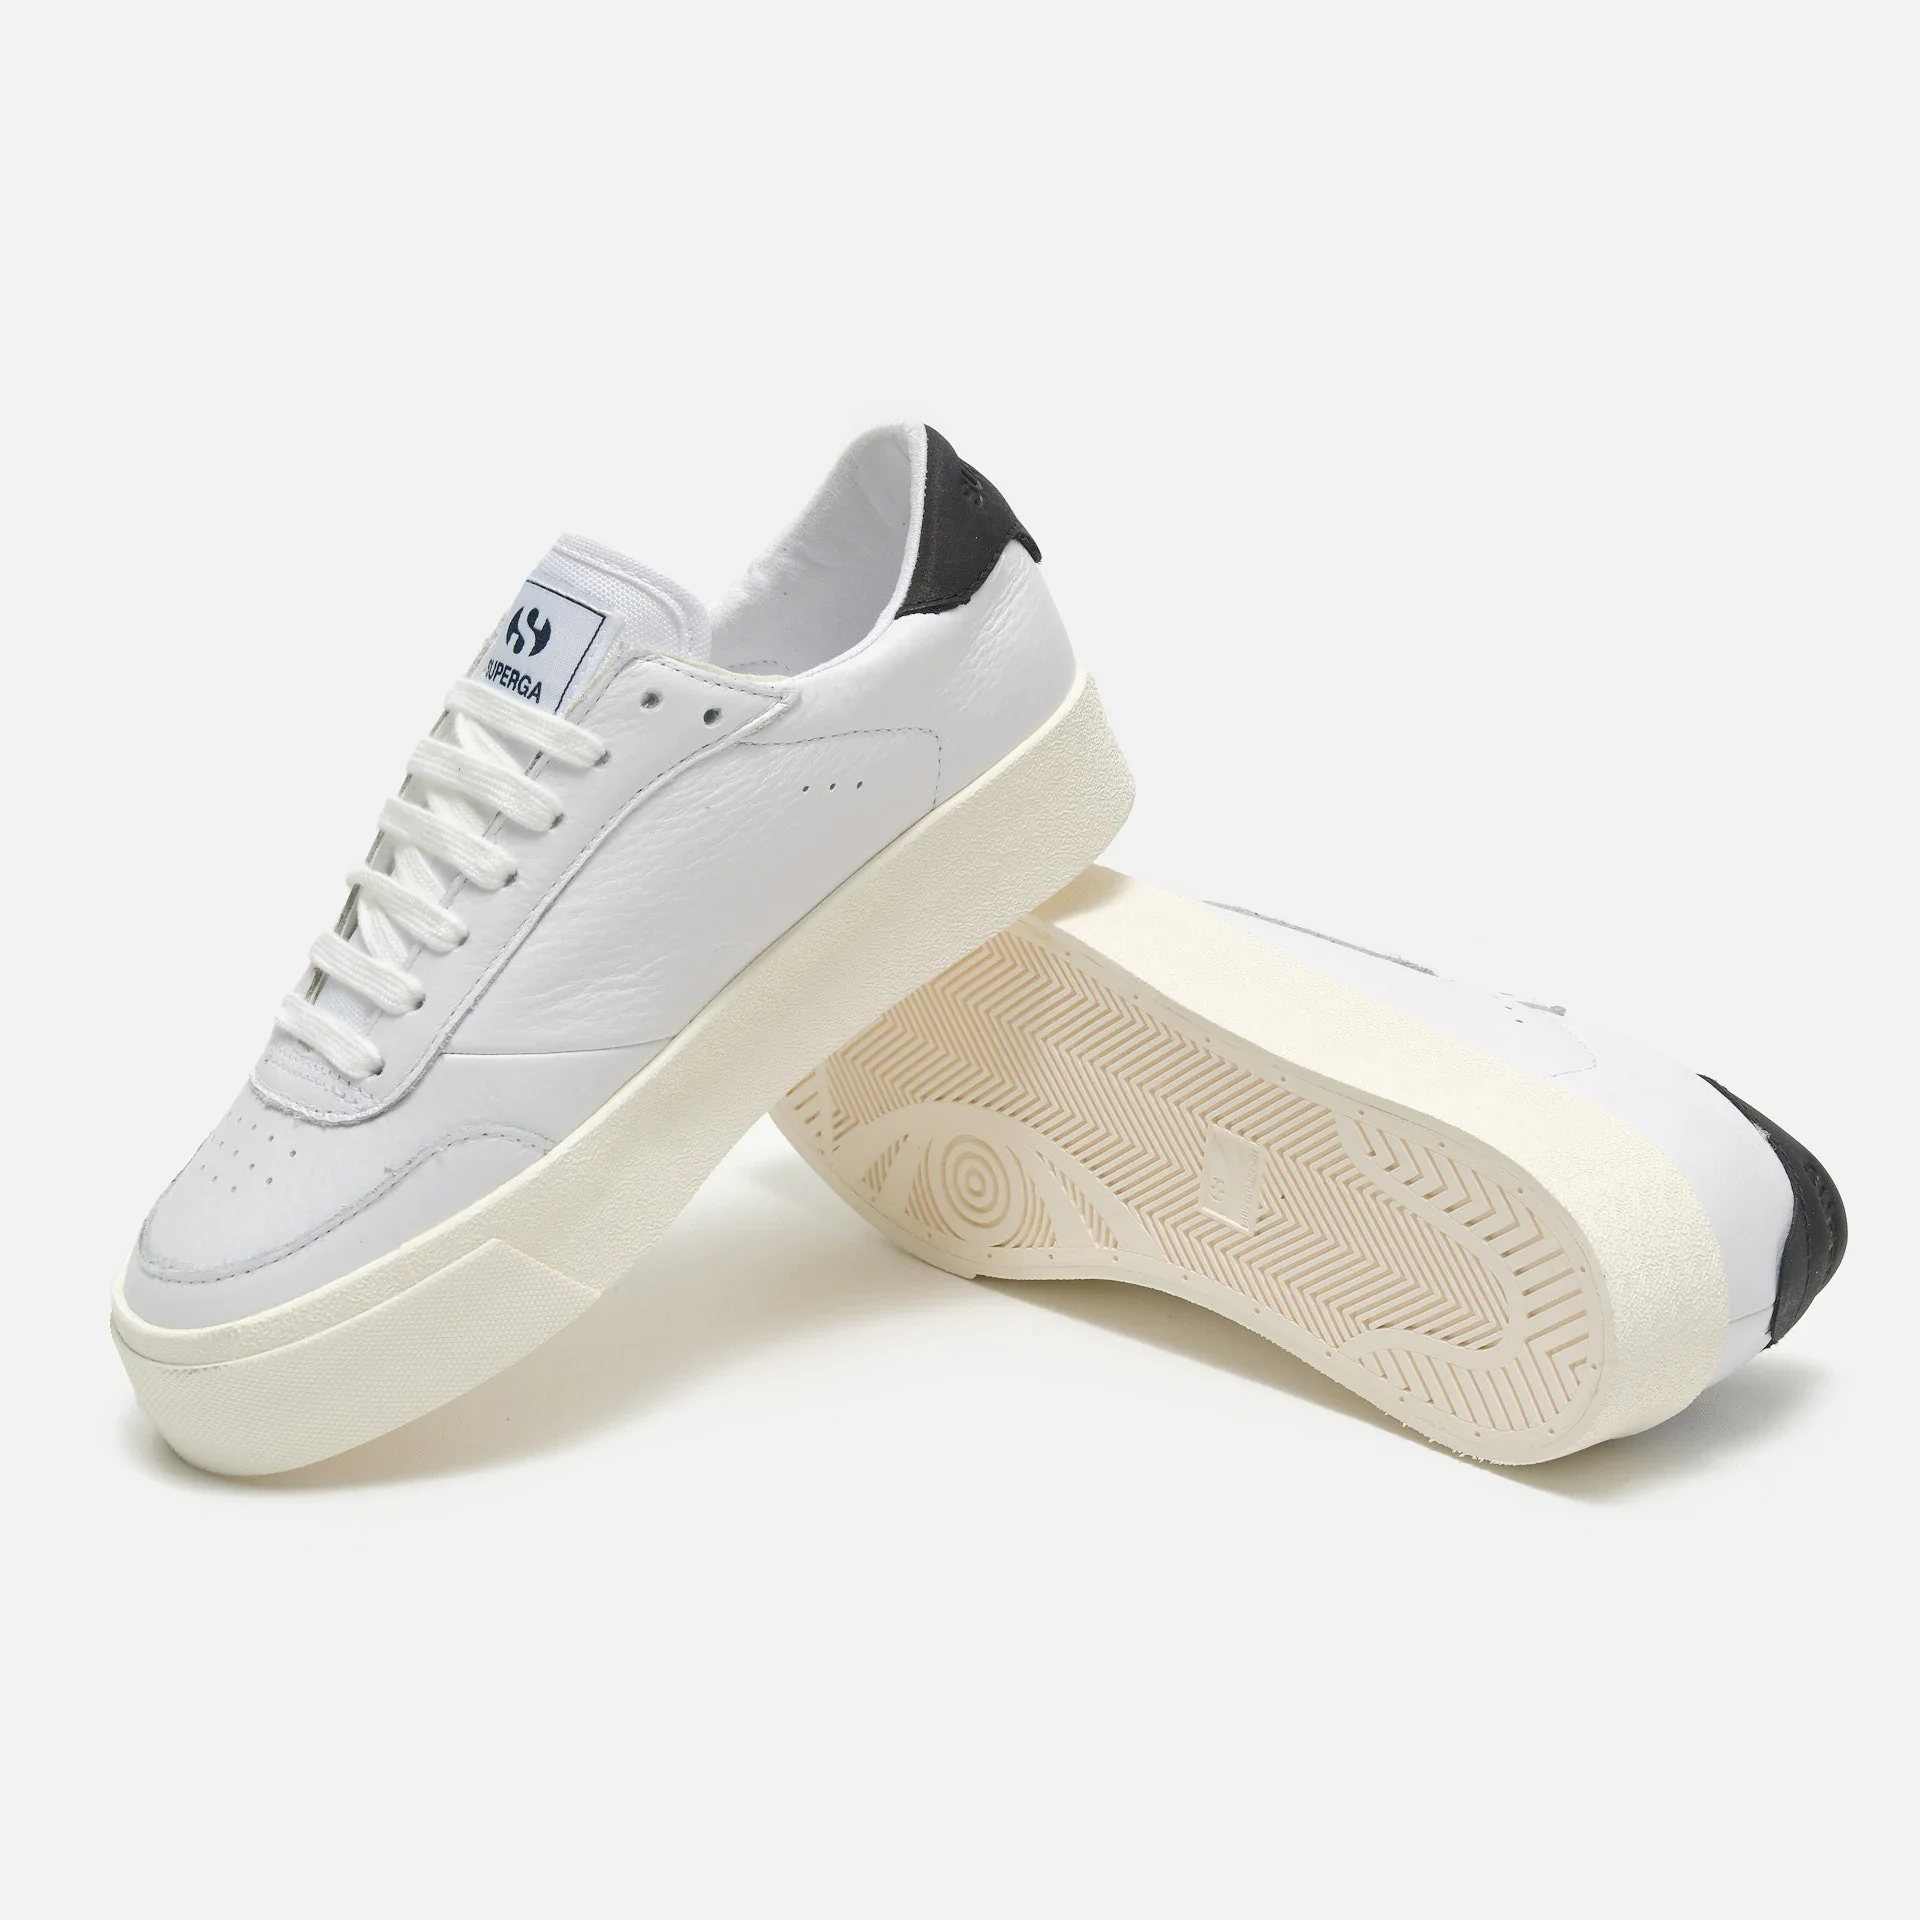 Superga 3843 Clubesse Platform Sneaker White/Black